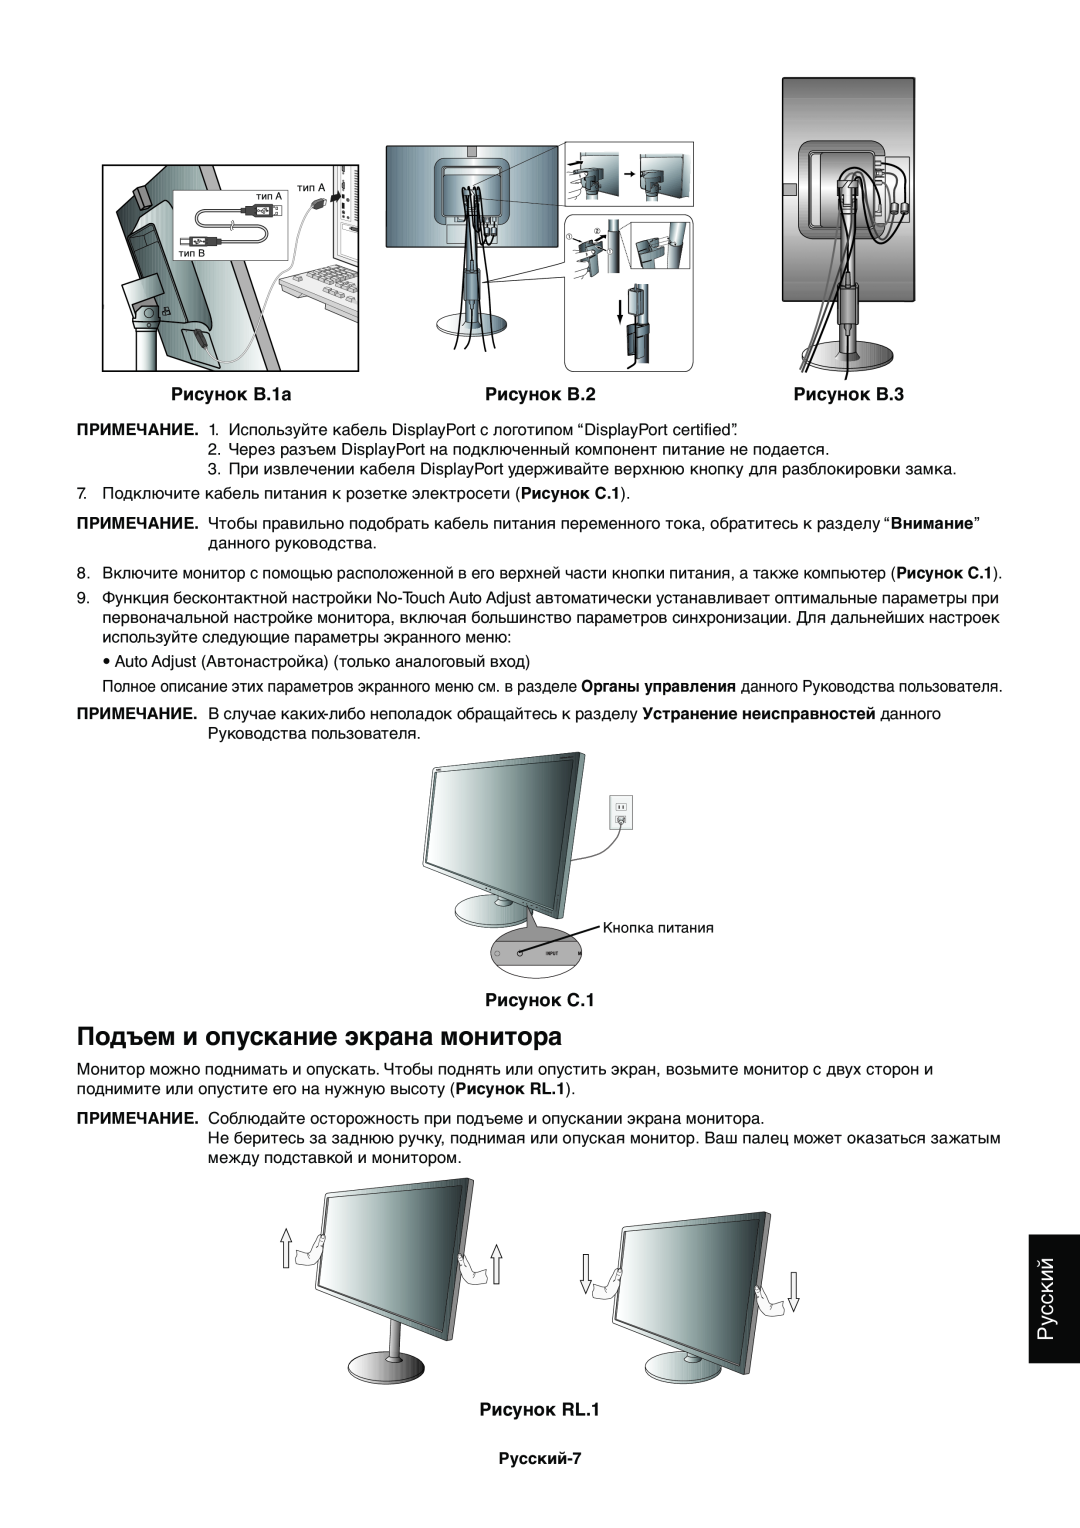 NEC EX231WP Подъем и опускание экрана монитора, Русский, Рисунок B.1a, Рисунок B.2, Рисунок B.3, Рисунок C.1, Рисунок RL.1 